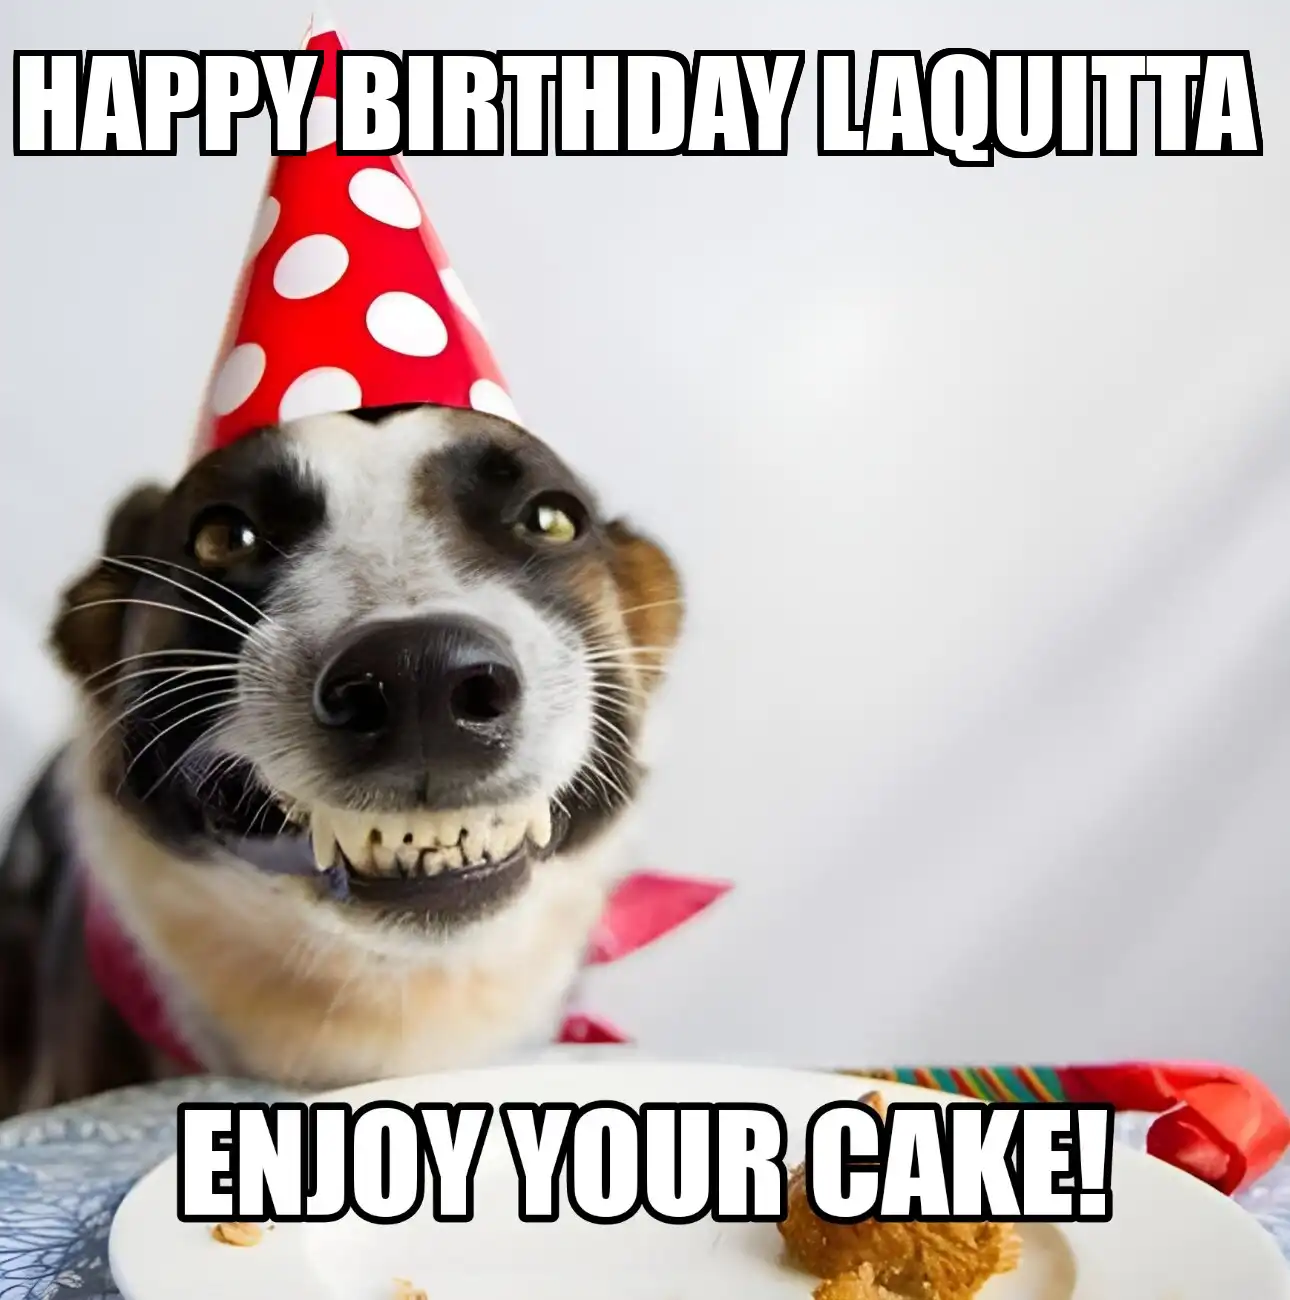 Happy Birthday Laquitta Enjoy Your Cake Dog Meme